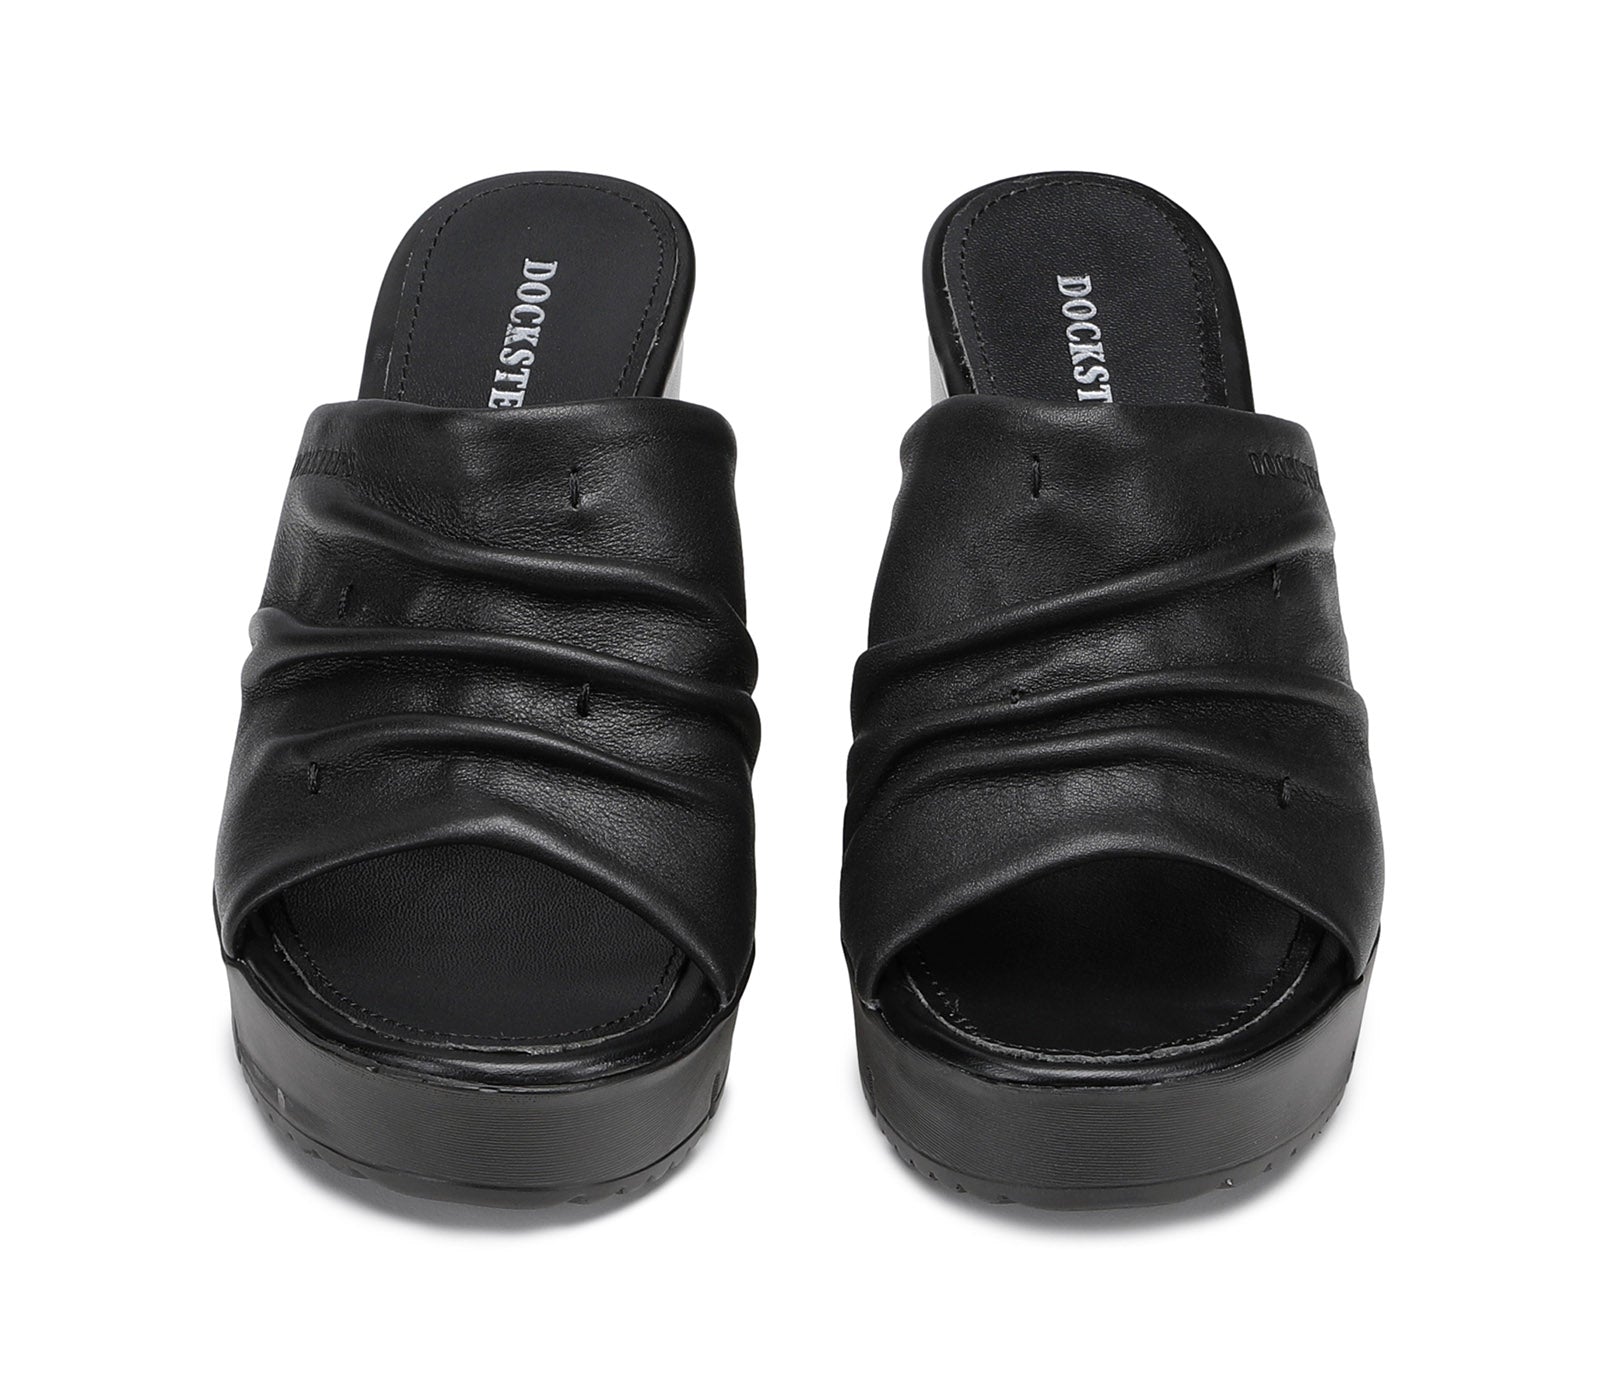 Black Docksteps wedge sandals for women